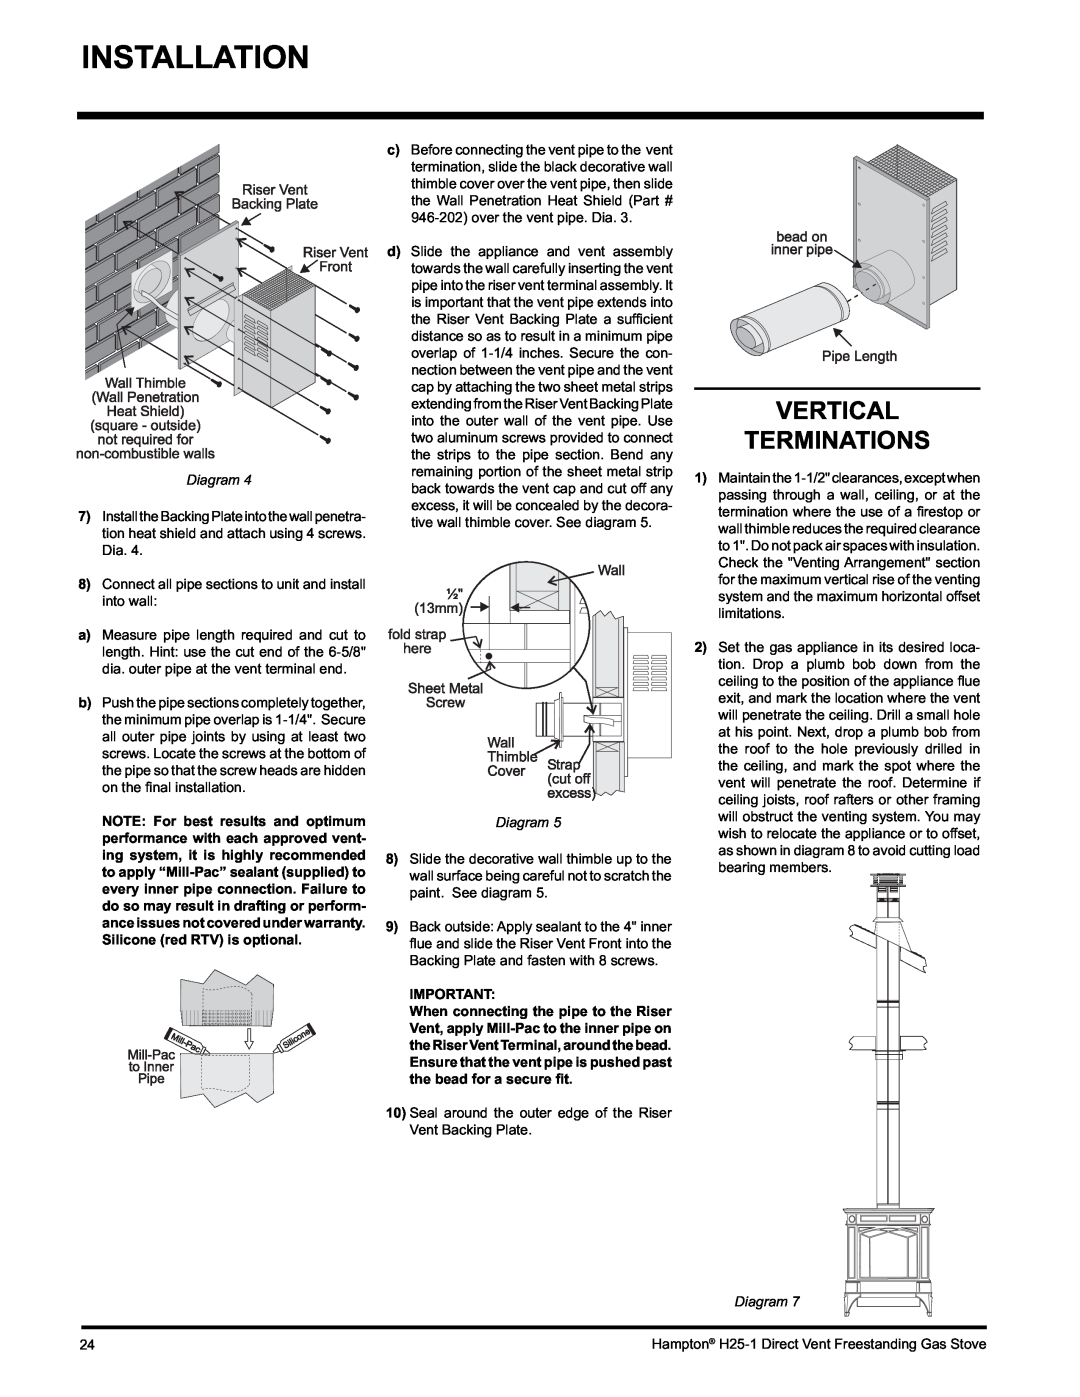 Hampton Direct H25-NG1, H25-LP1, H25-LP1 Propane installation manual Vertical Terminations, Diagram 